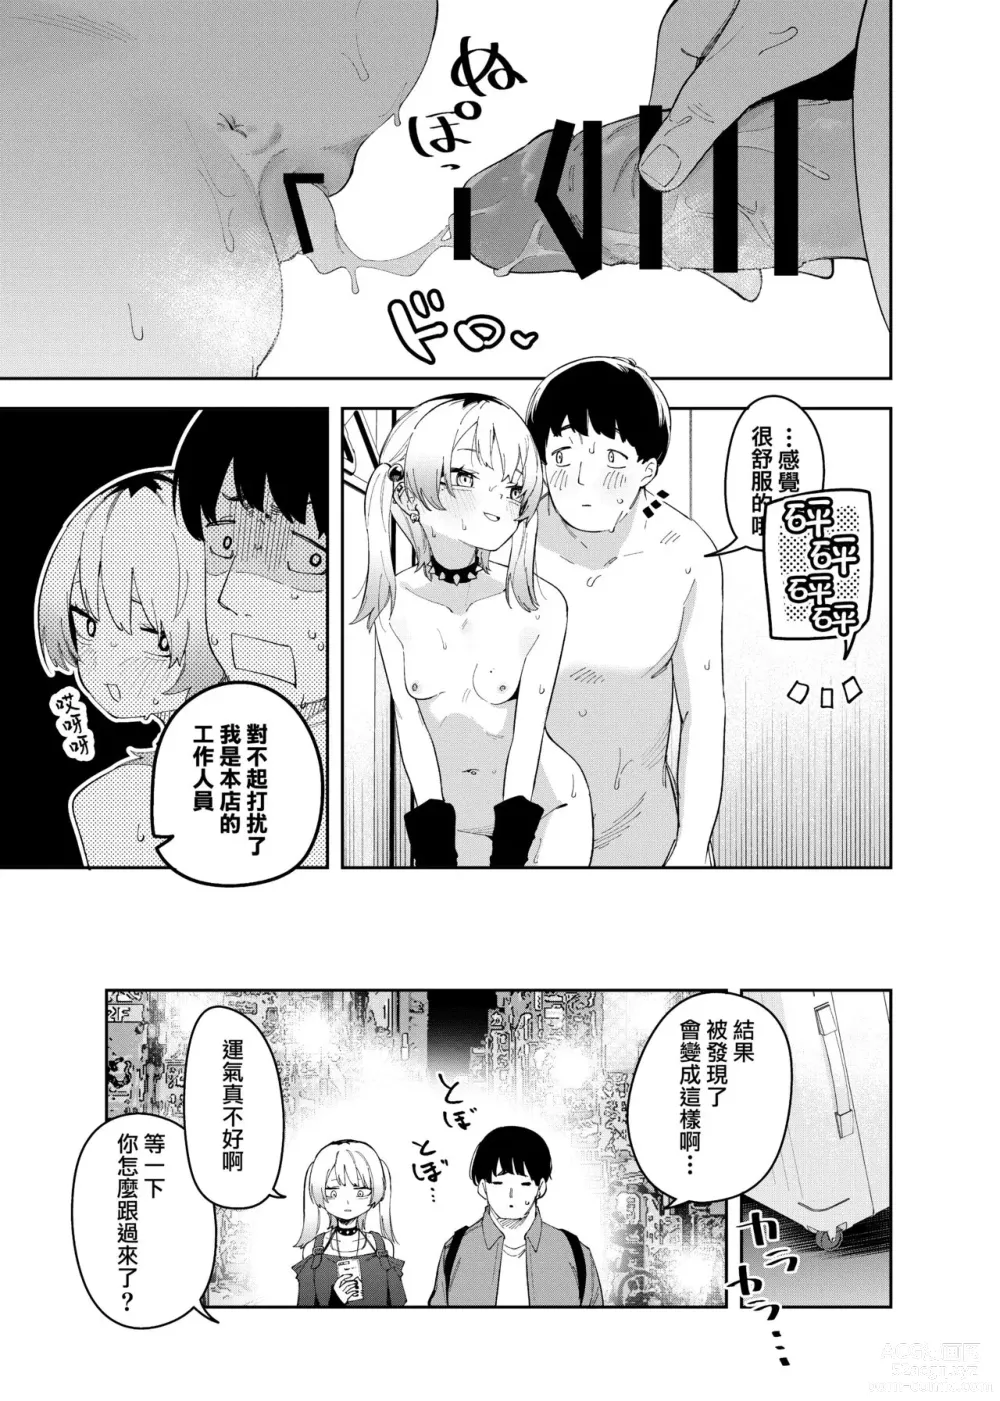 Page 51 of manga rinzin ha yuumei haisin sya4 nin me